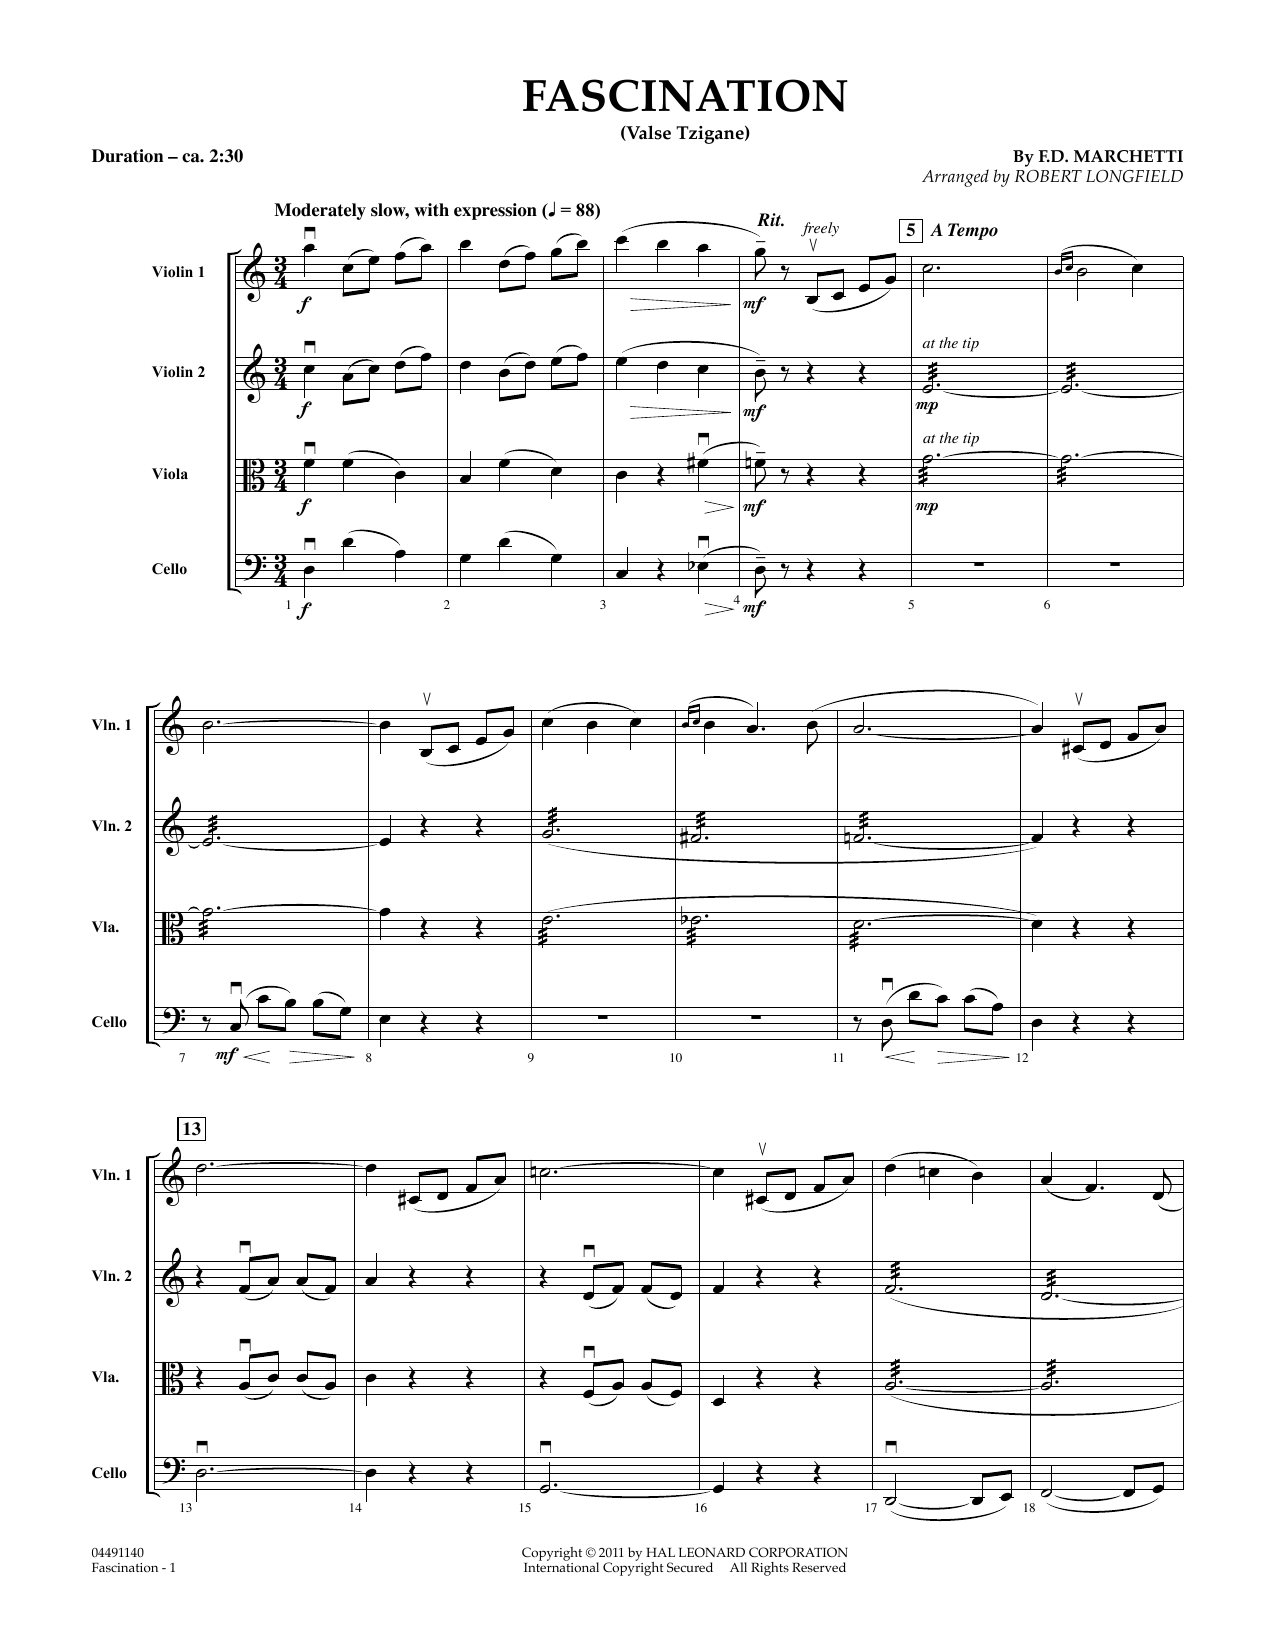 Download Robert Longfield Fascination (Valse Tzigane) - Conductor Sheet Music